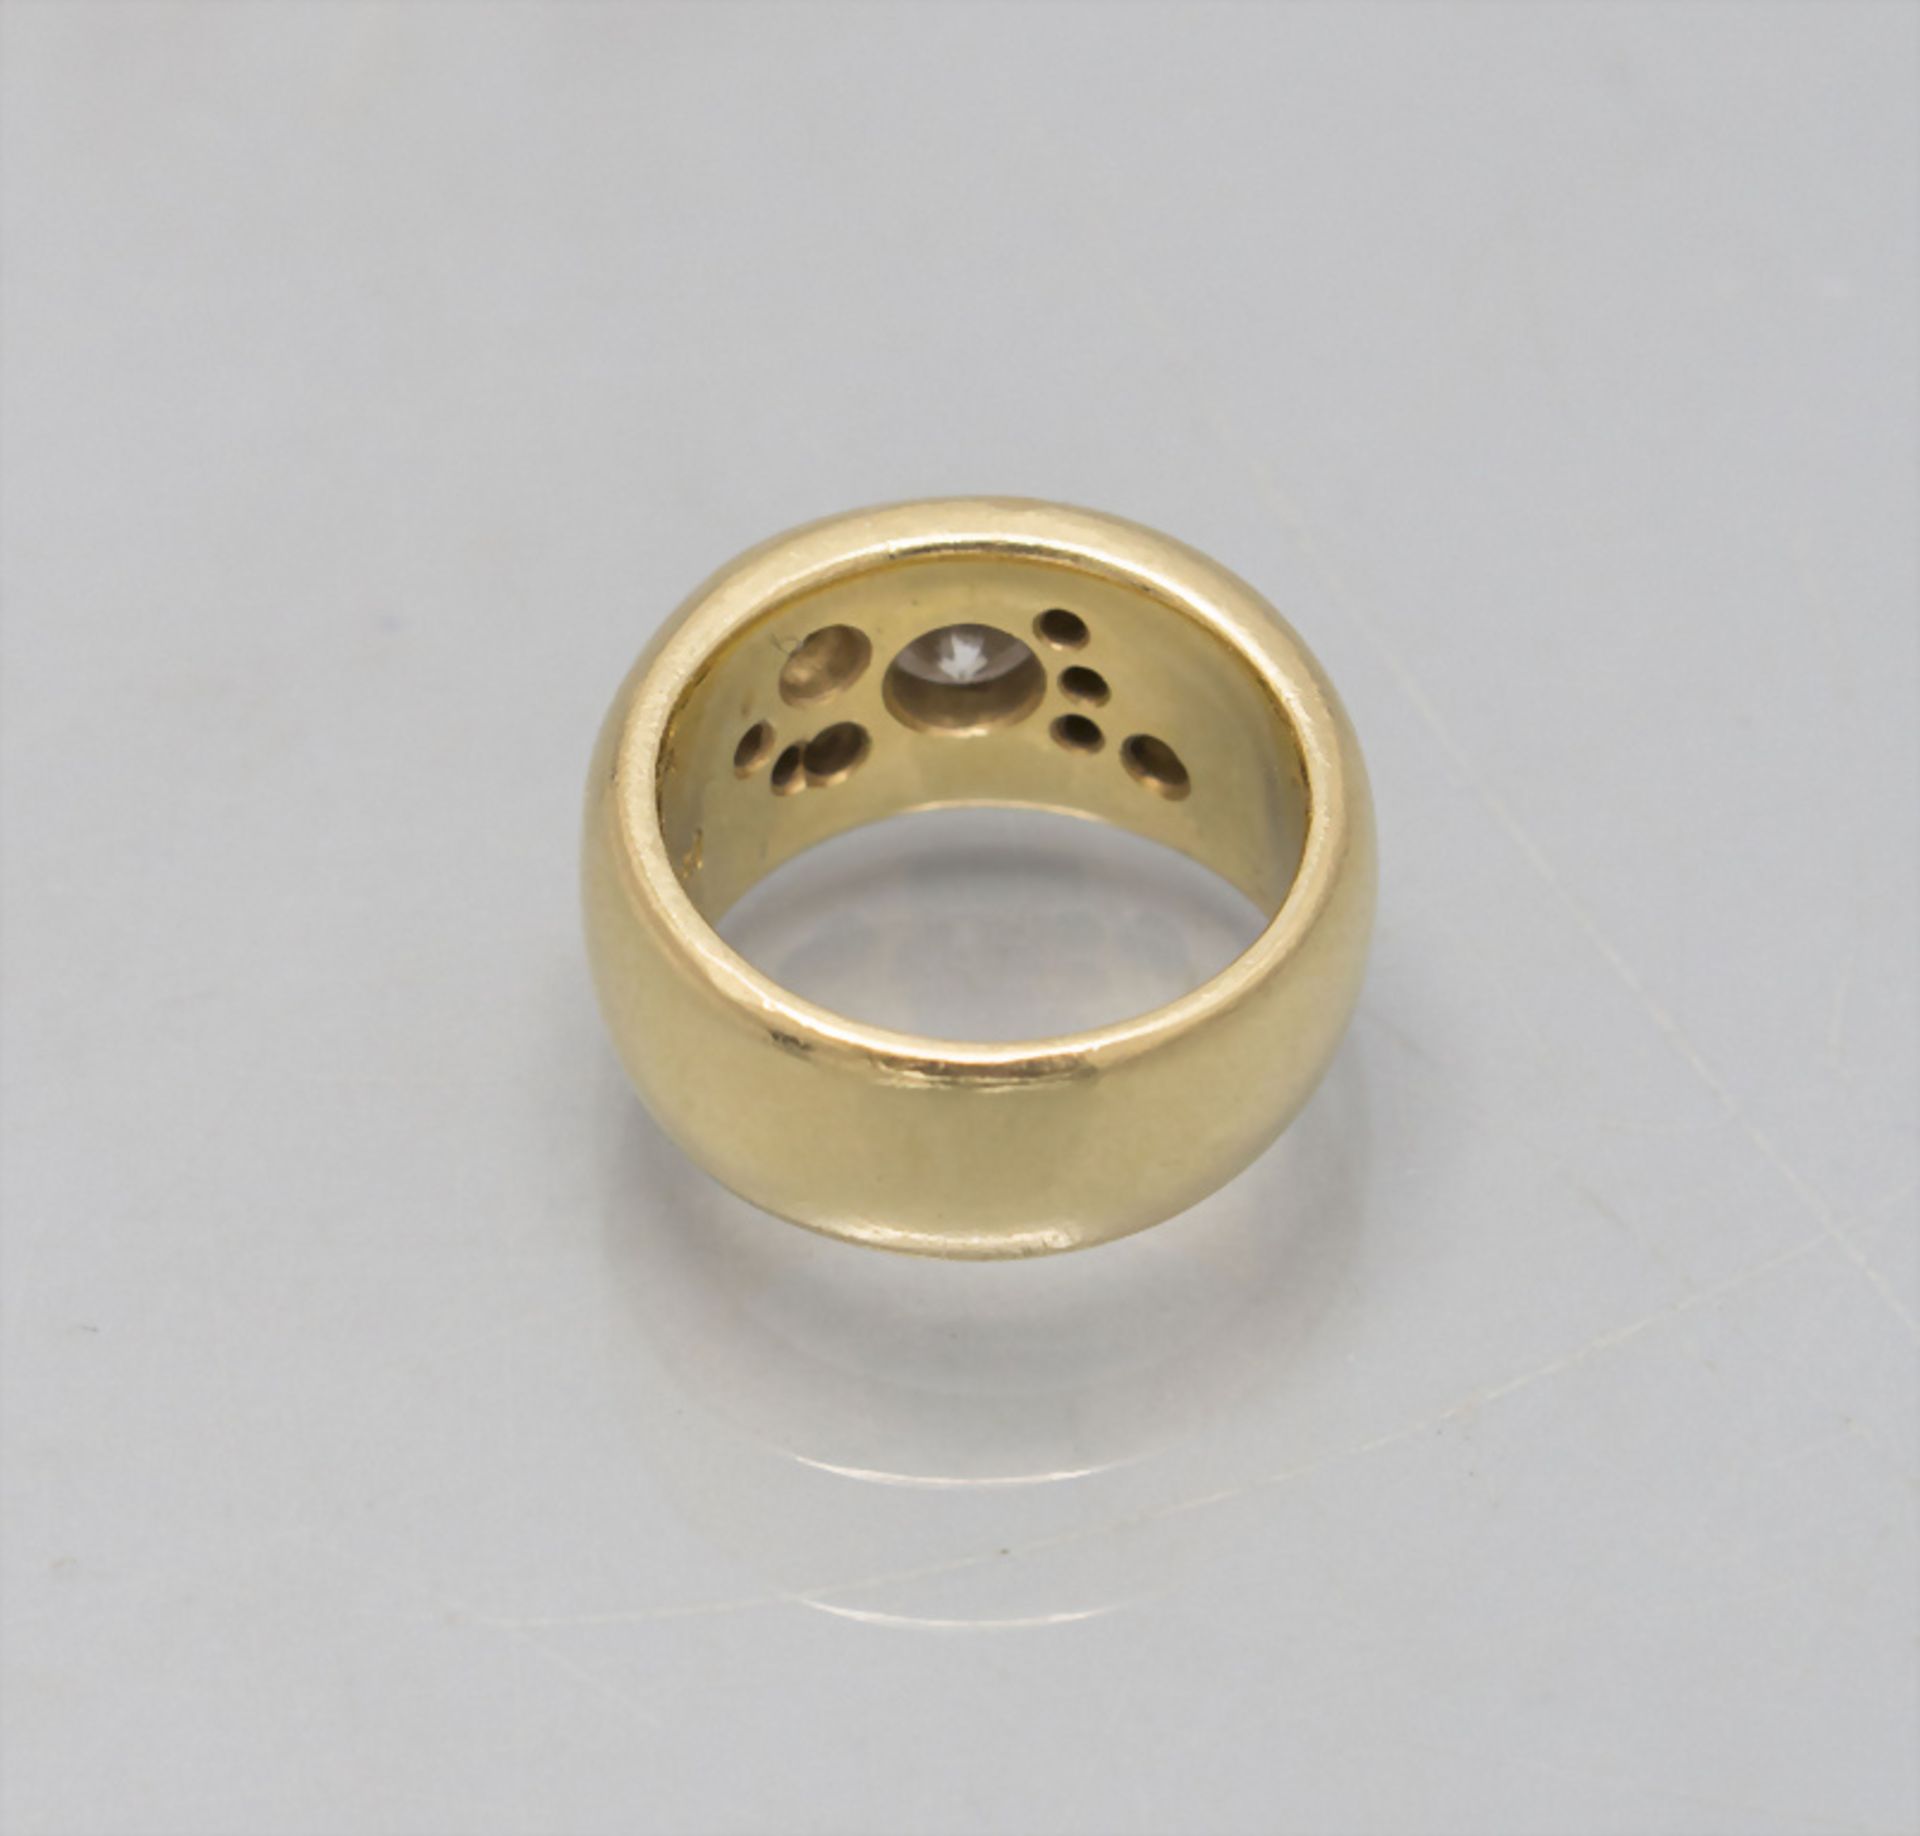 Damenring mit Diamanten / A ladies 18 ct gold ring with diamonds - Image 2 of 2